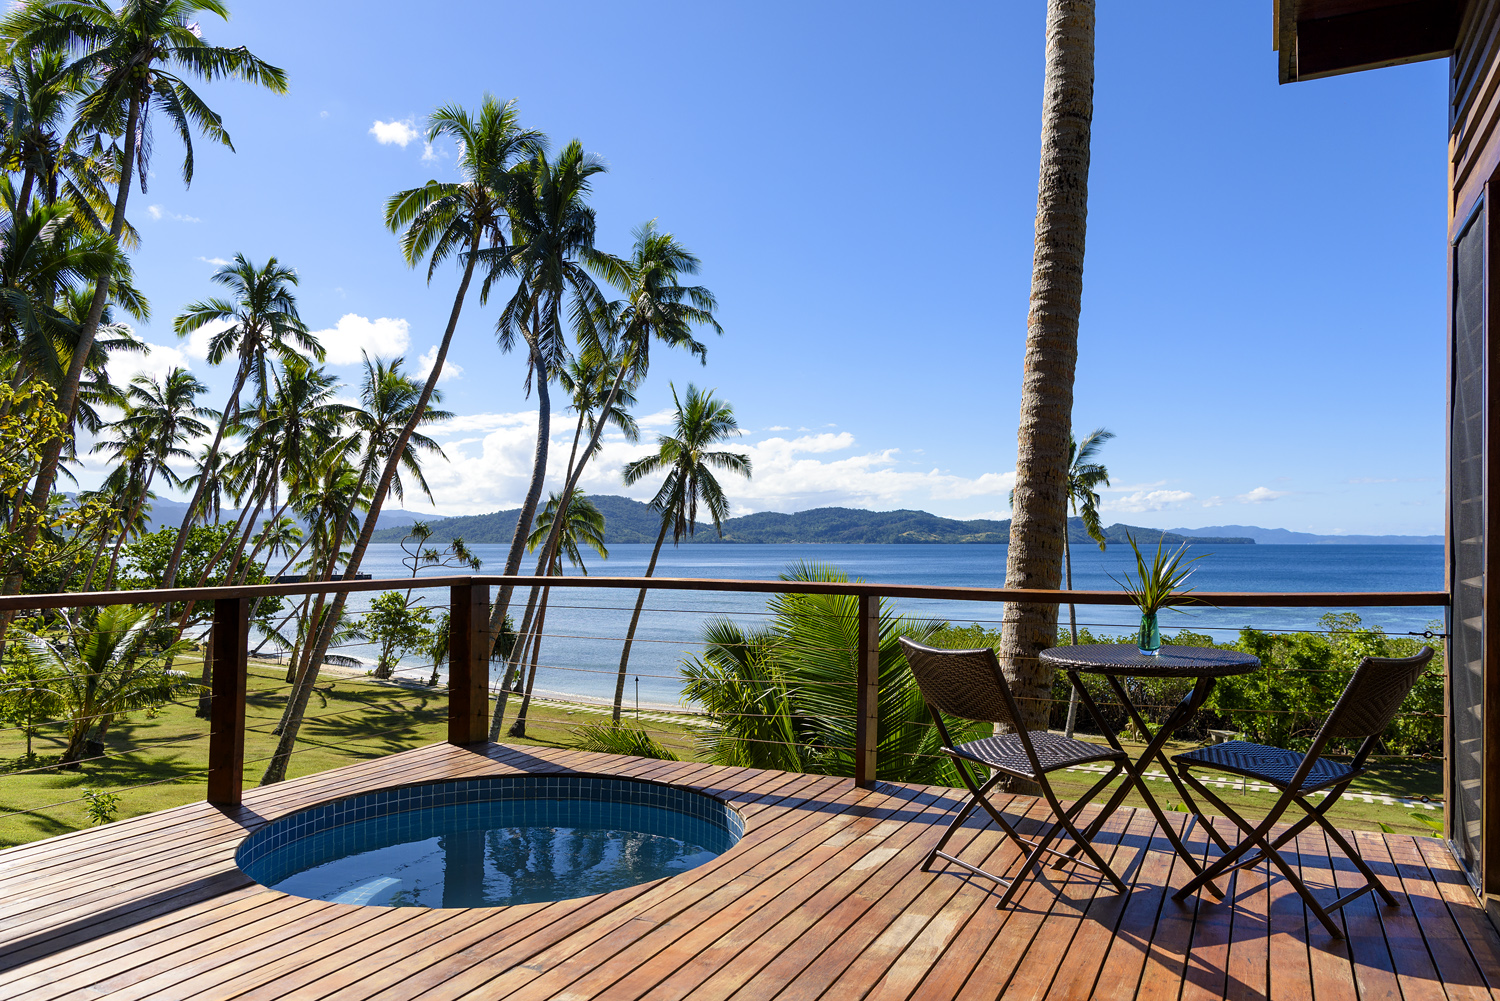 Oceanfront Villa - Ocean view deck and plunge pool, The Remote Resort Fiji Islands